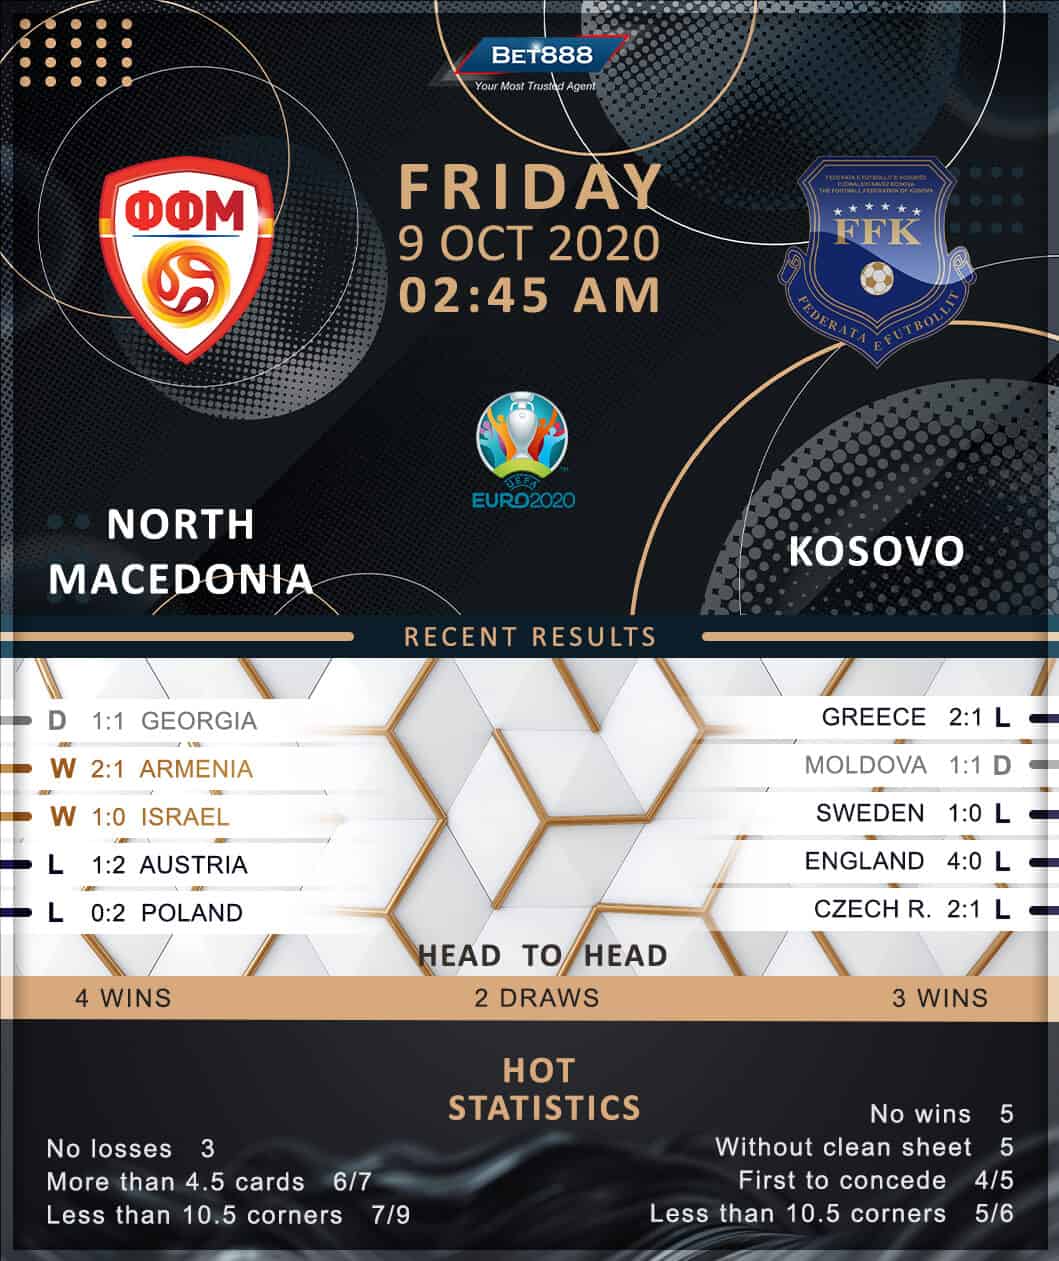 North Macedonia vs Kosovo 09/10/20